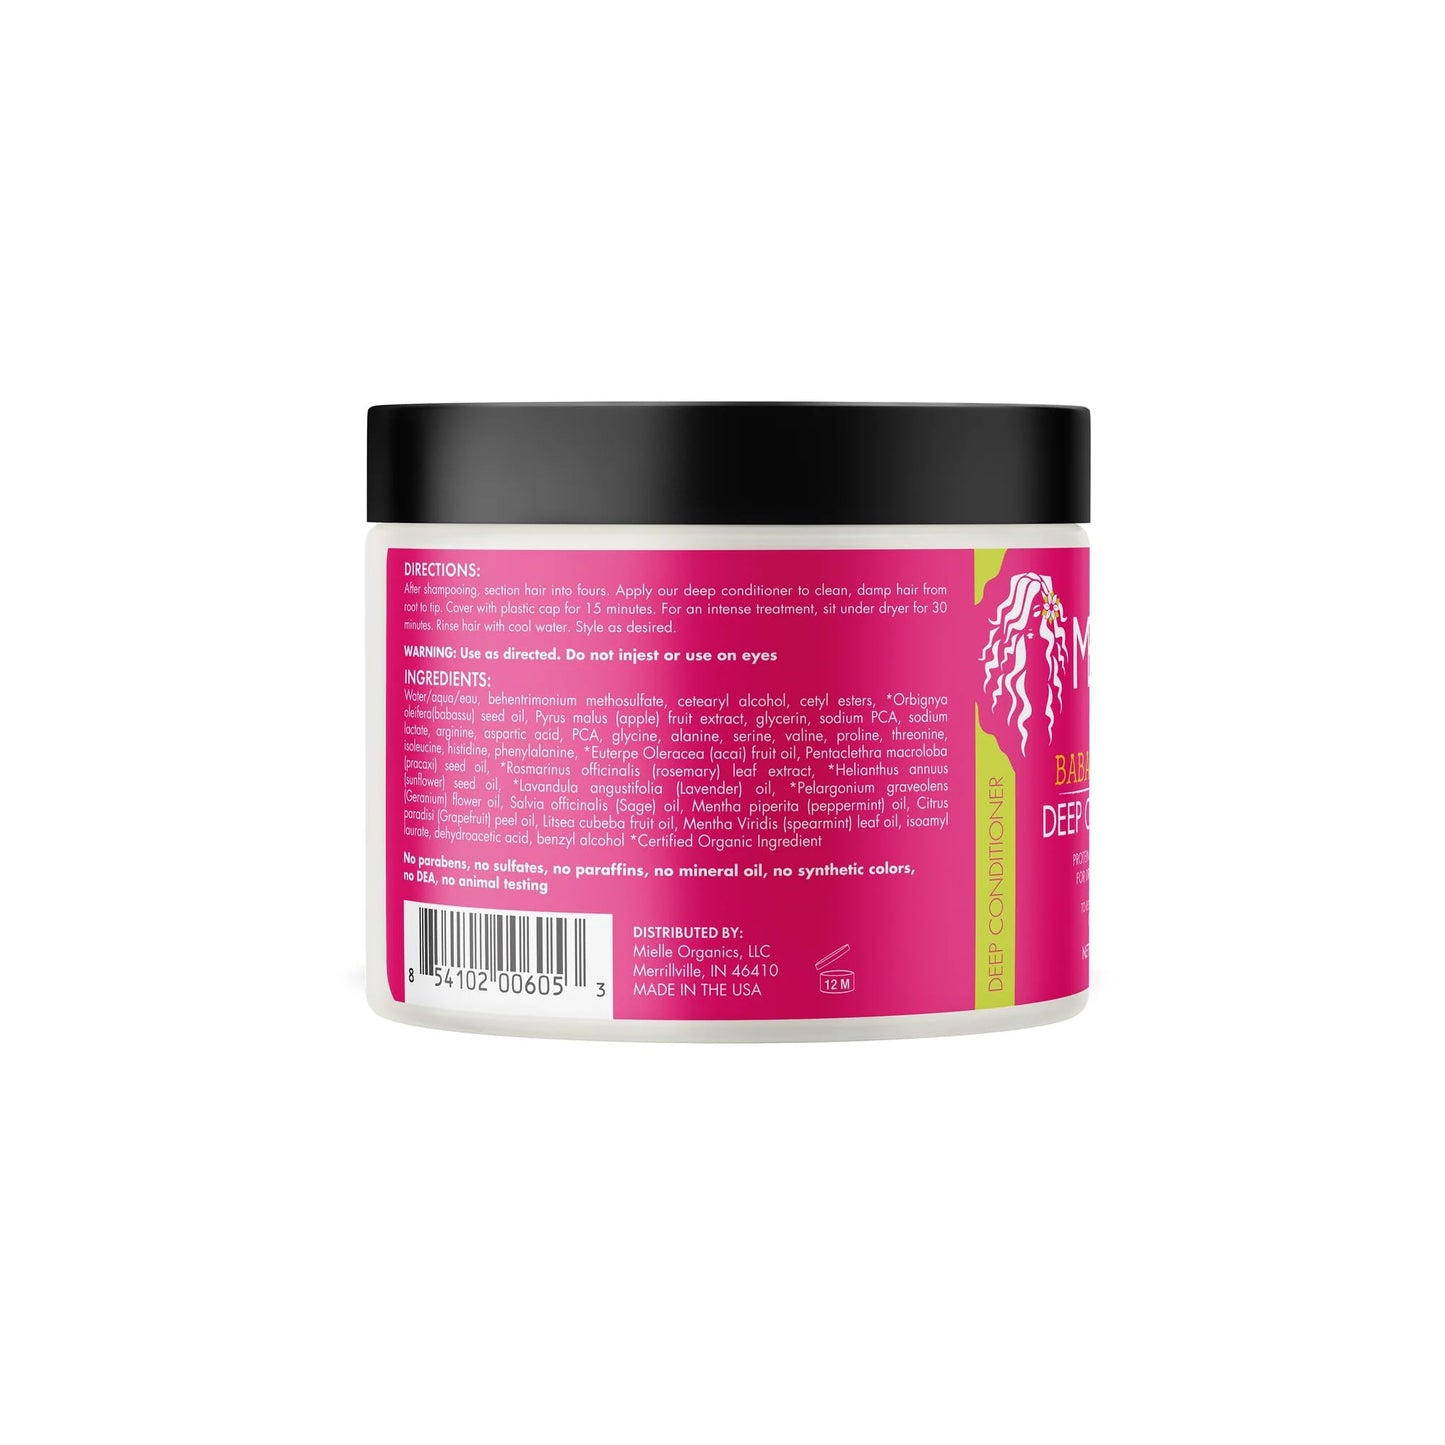 Mielle Organics Babassu Oil Conditioning Sulfate-Free Shampoo - 8 fl oz